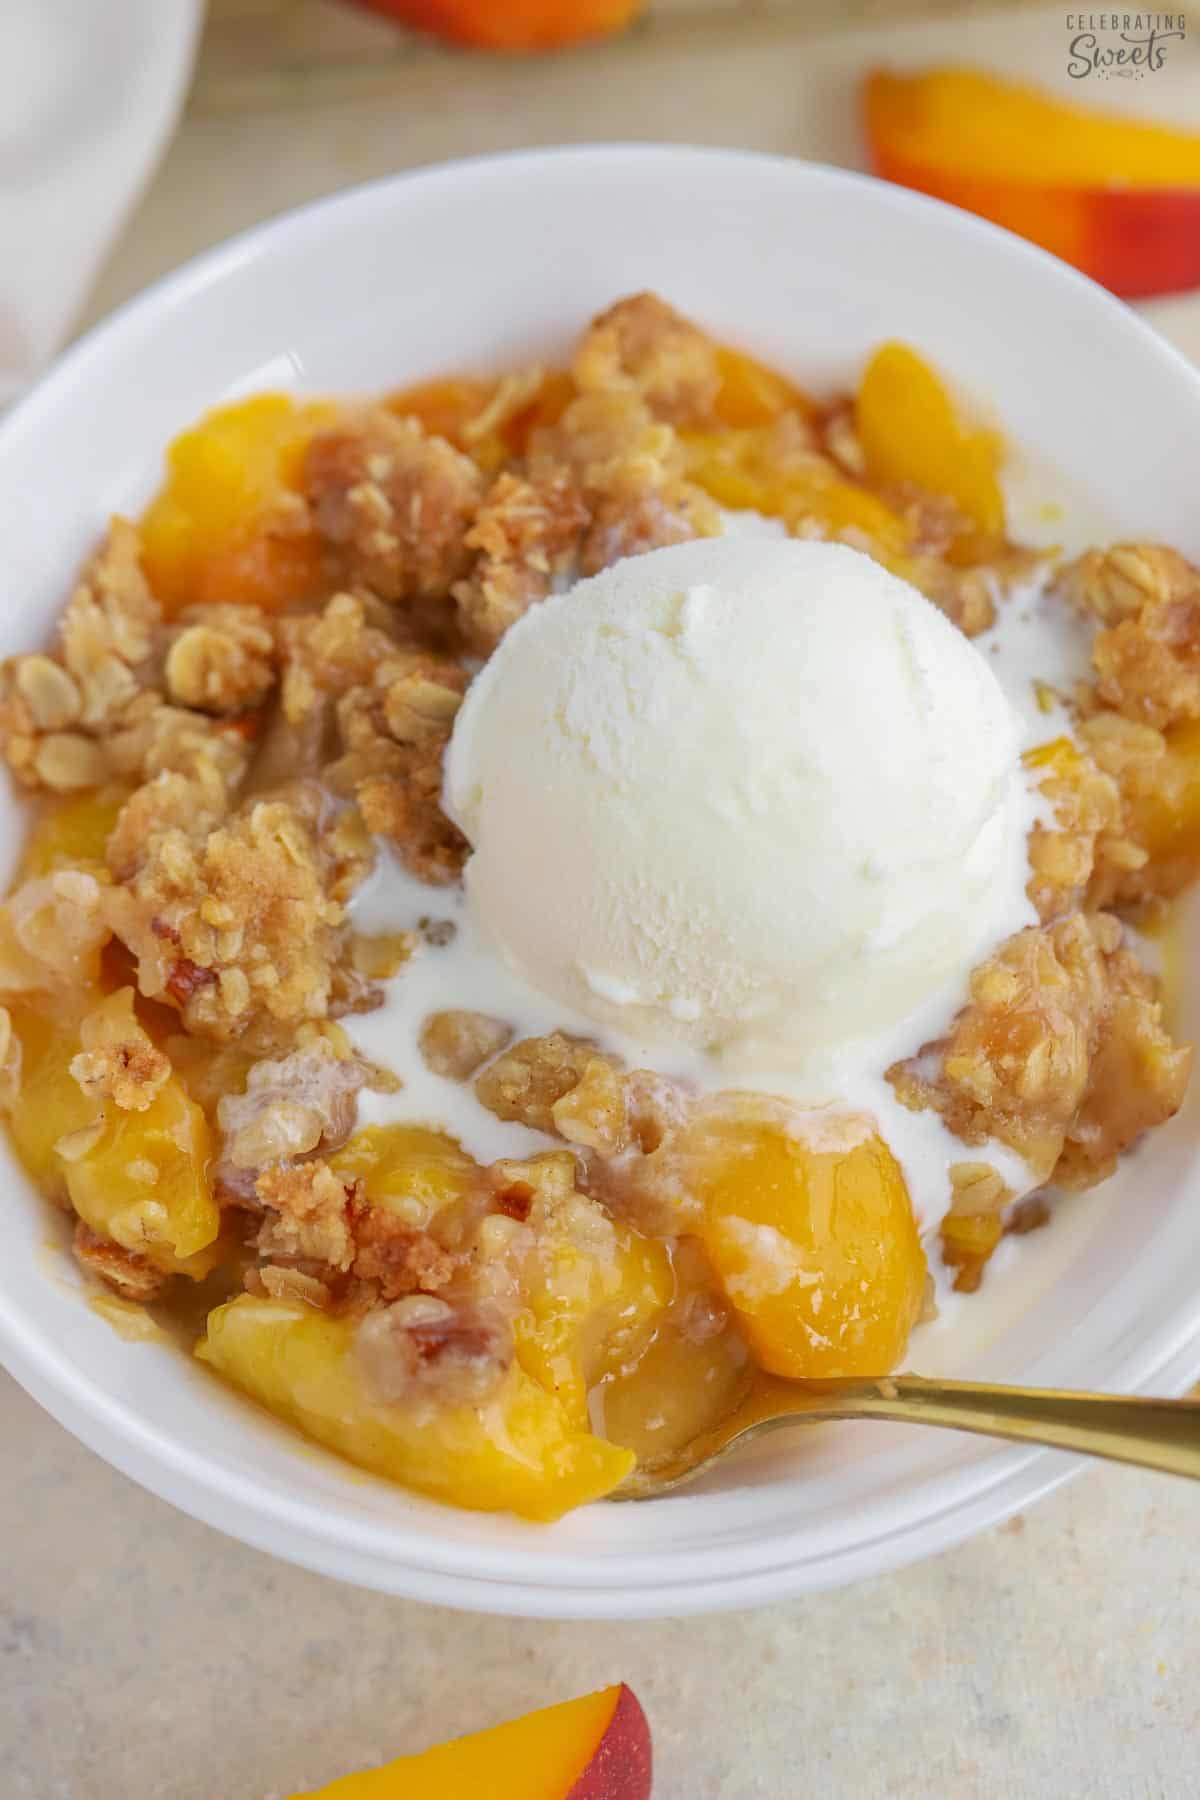 Peach crisp topped with vanilla ice cream in a white bowl.